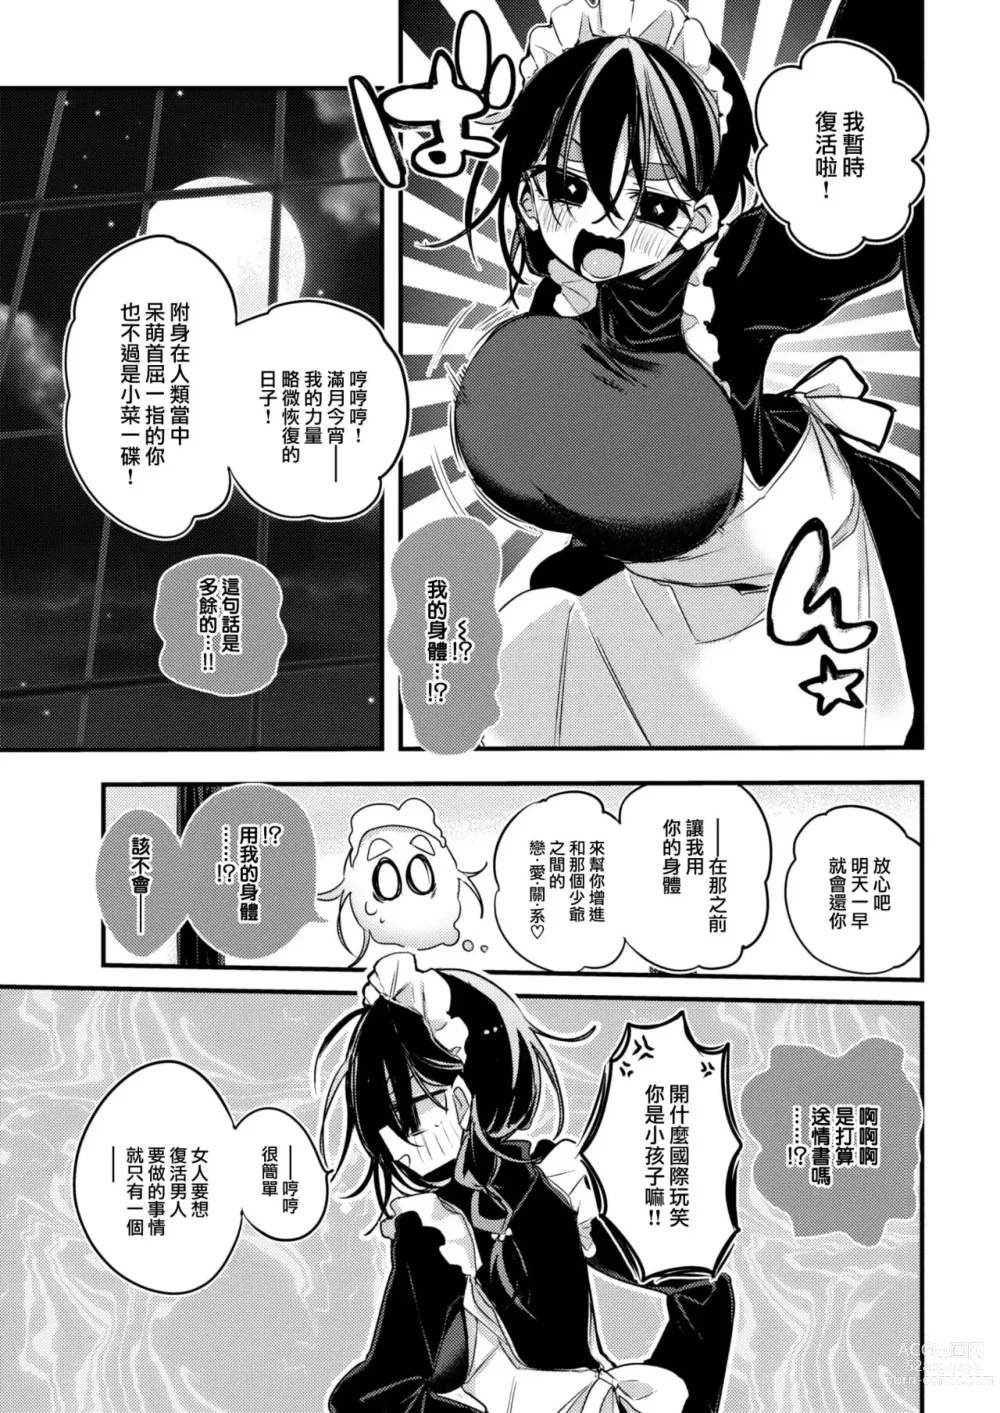 Page 6 of manga Akumade Maid desukara!